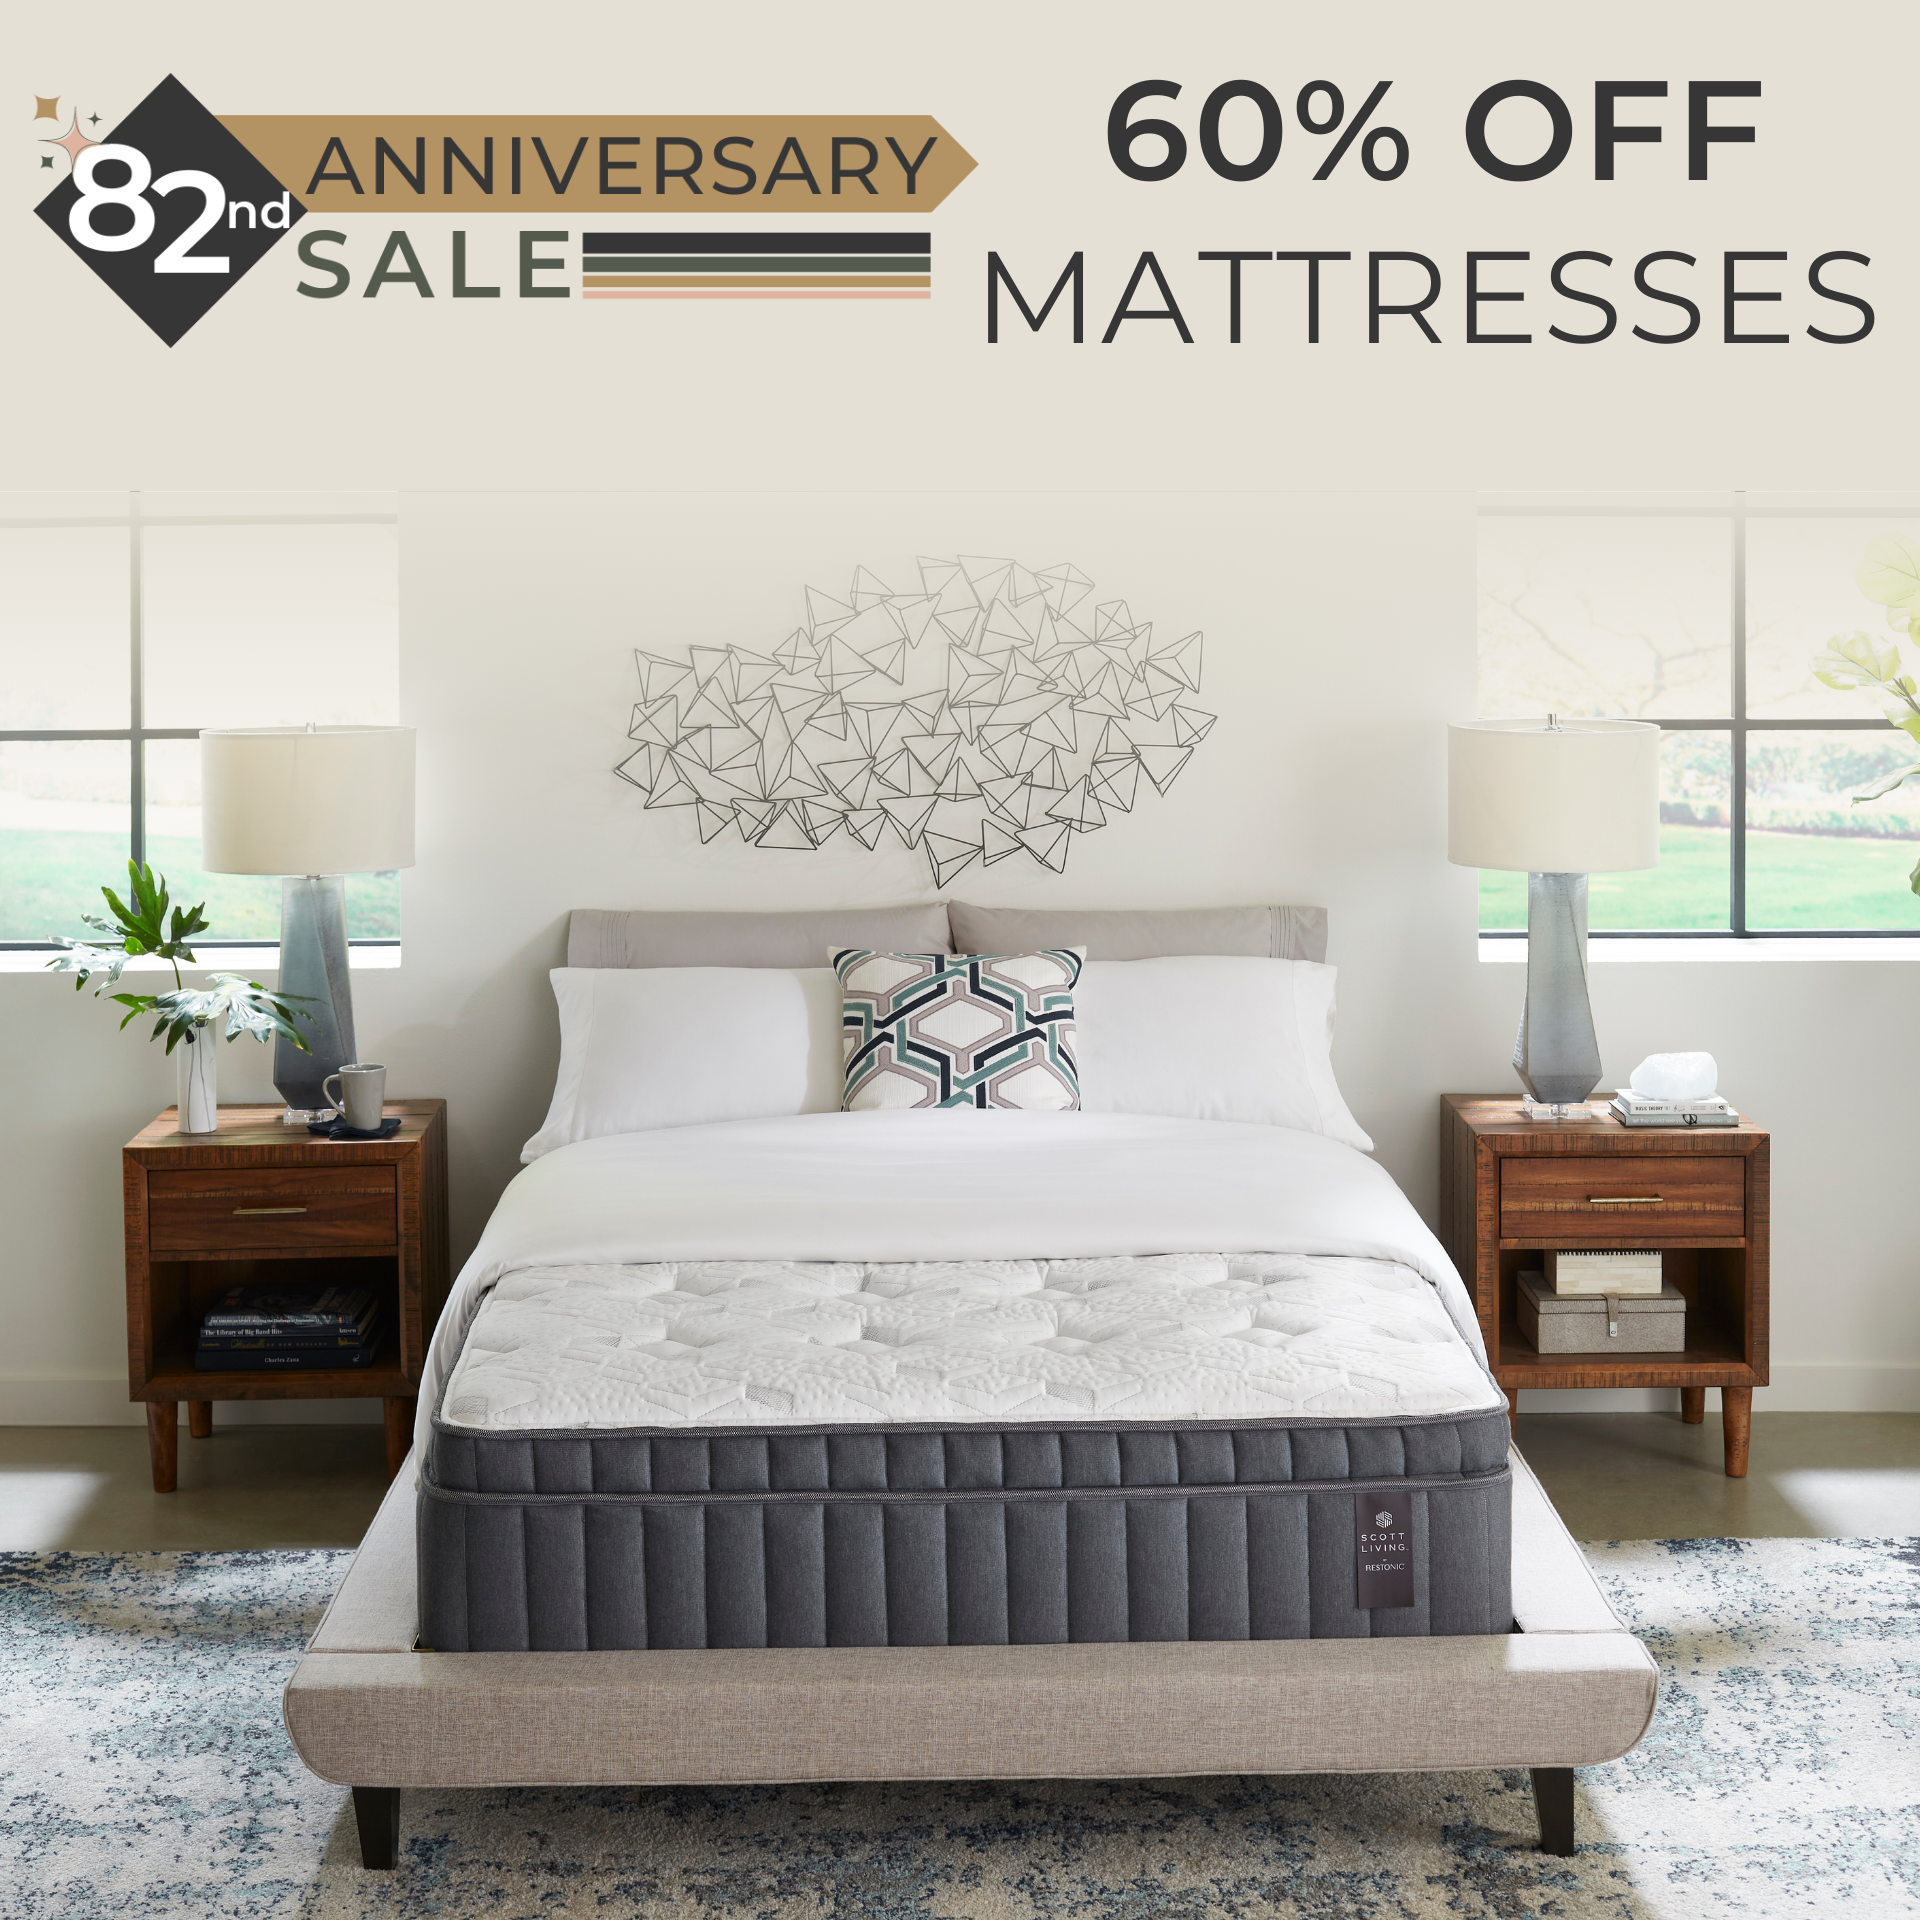 60% off mattresses